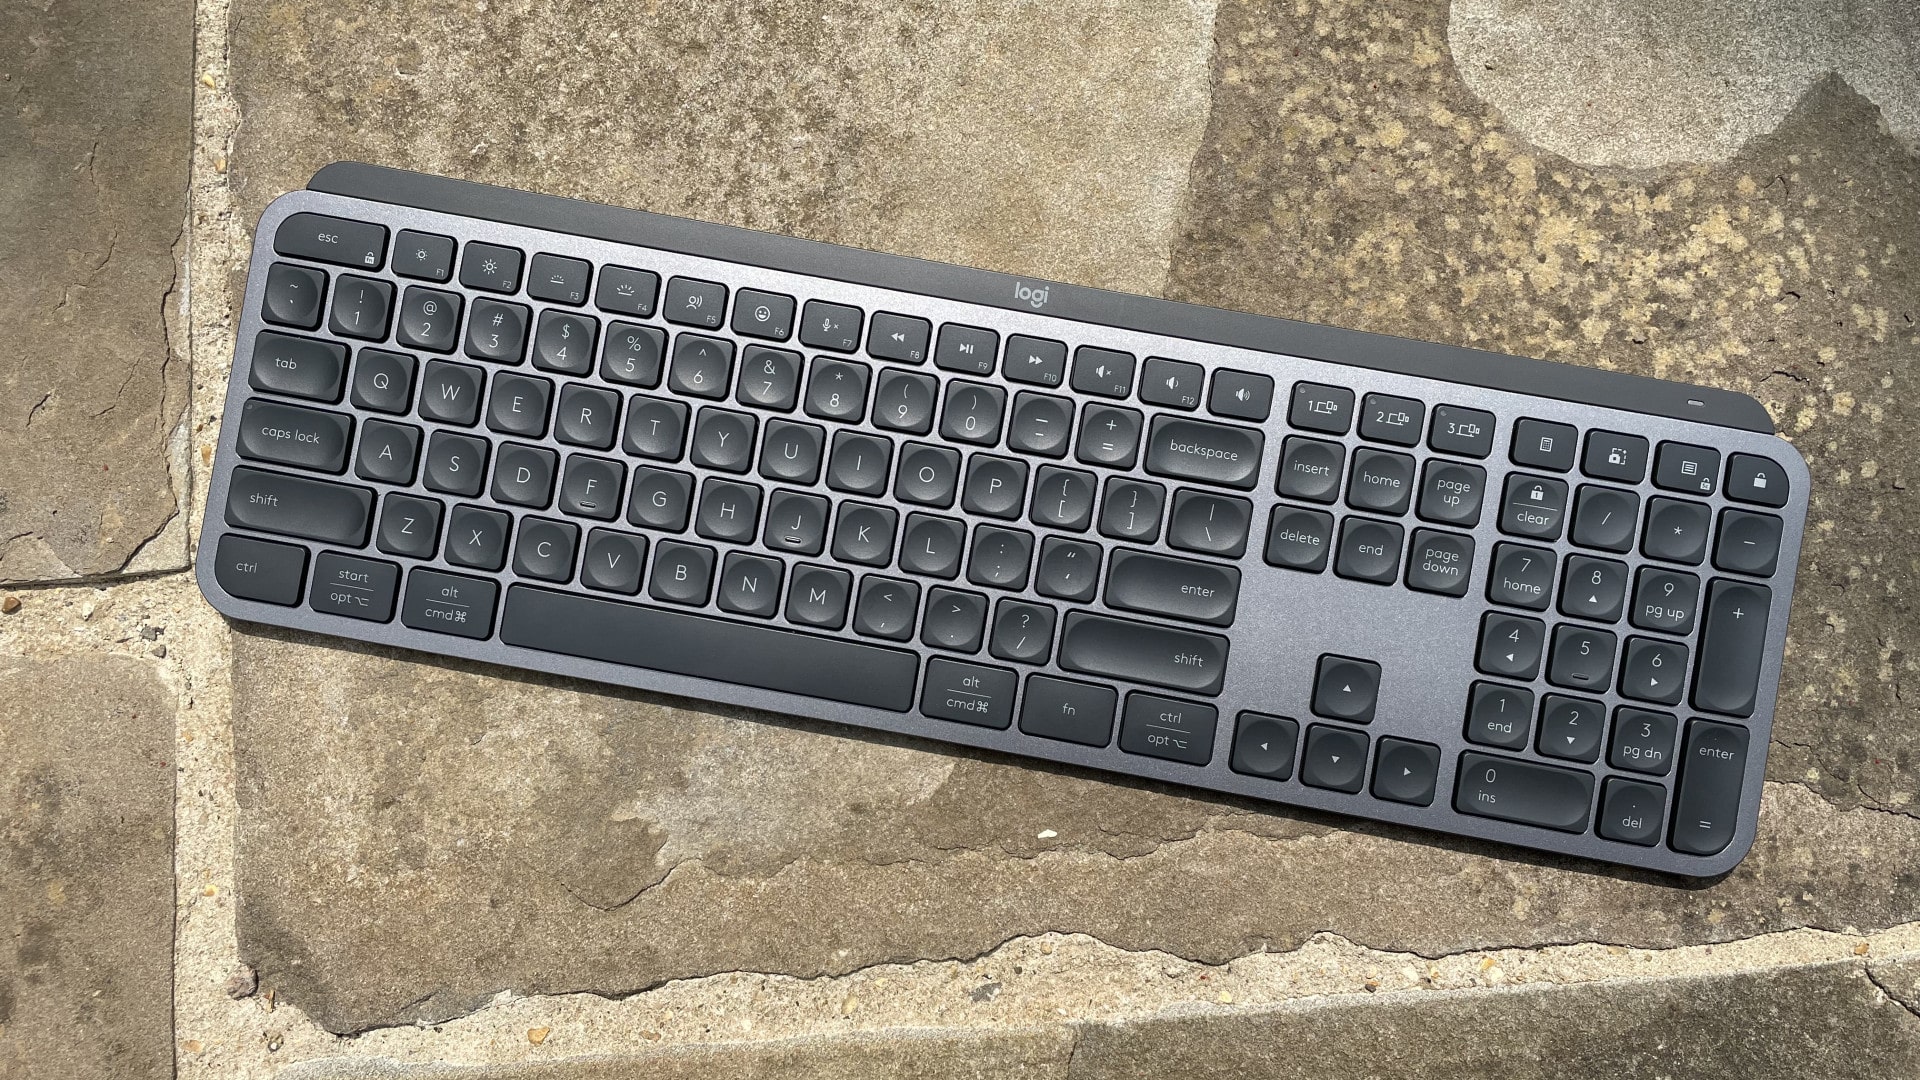 MX Keys vs MX Mechanical - Which Logitech Keyboard Should You Buy